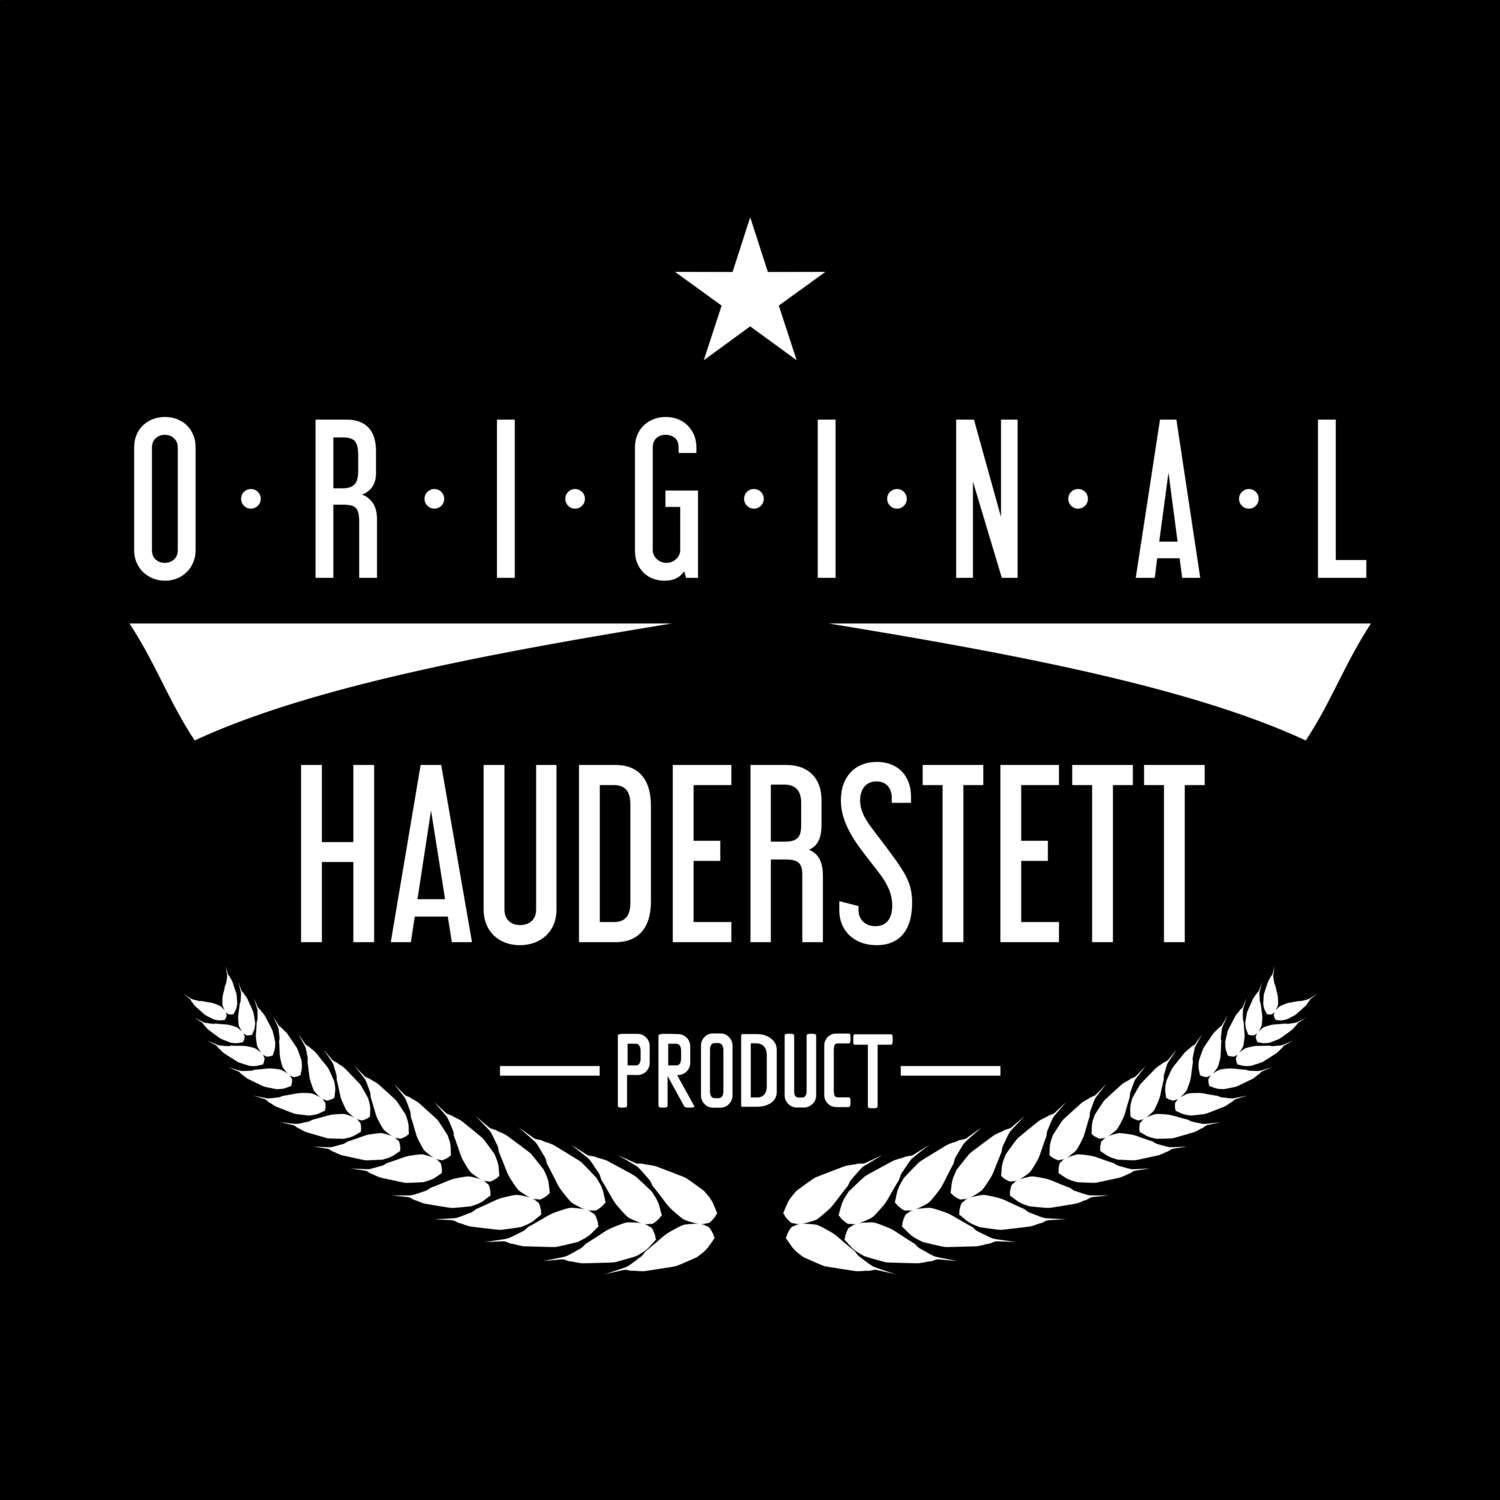 Hauderstett T-Shirt »Original Product«